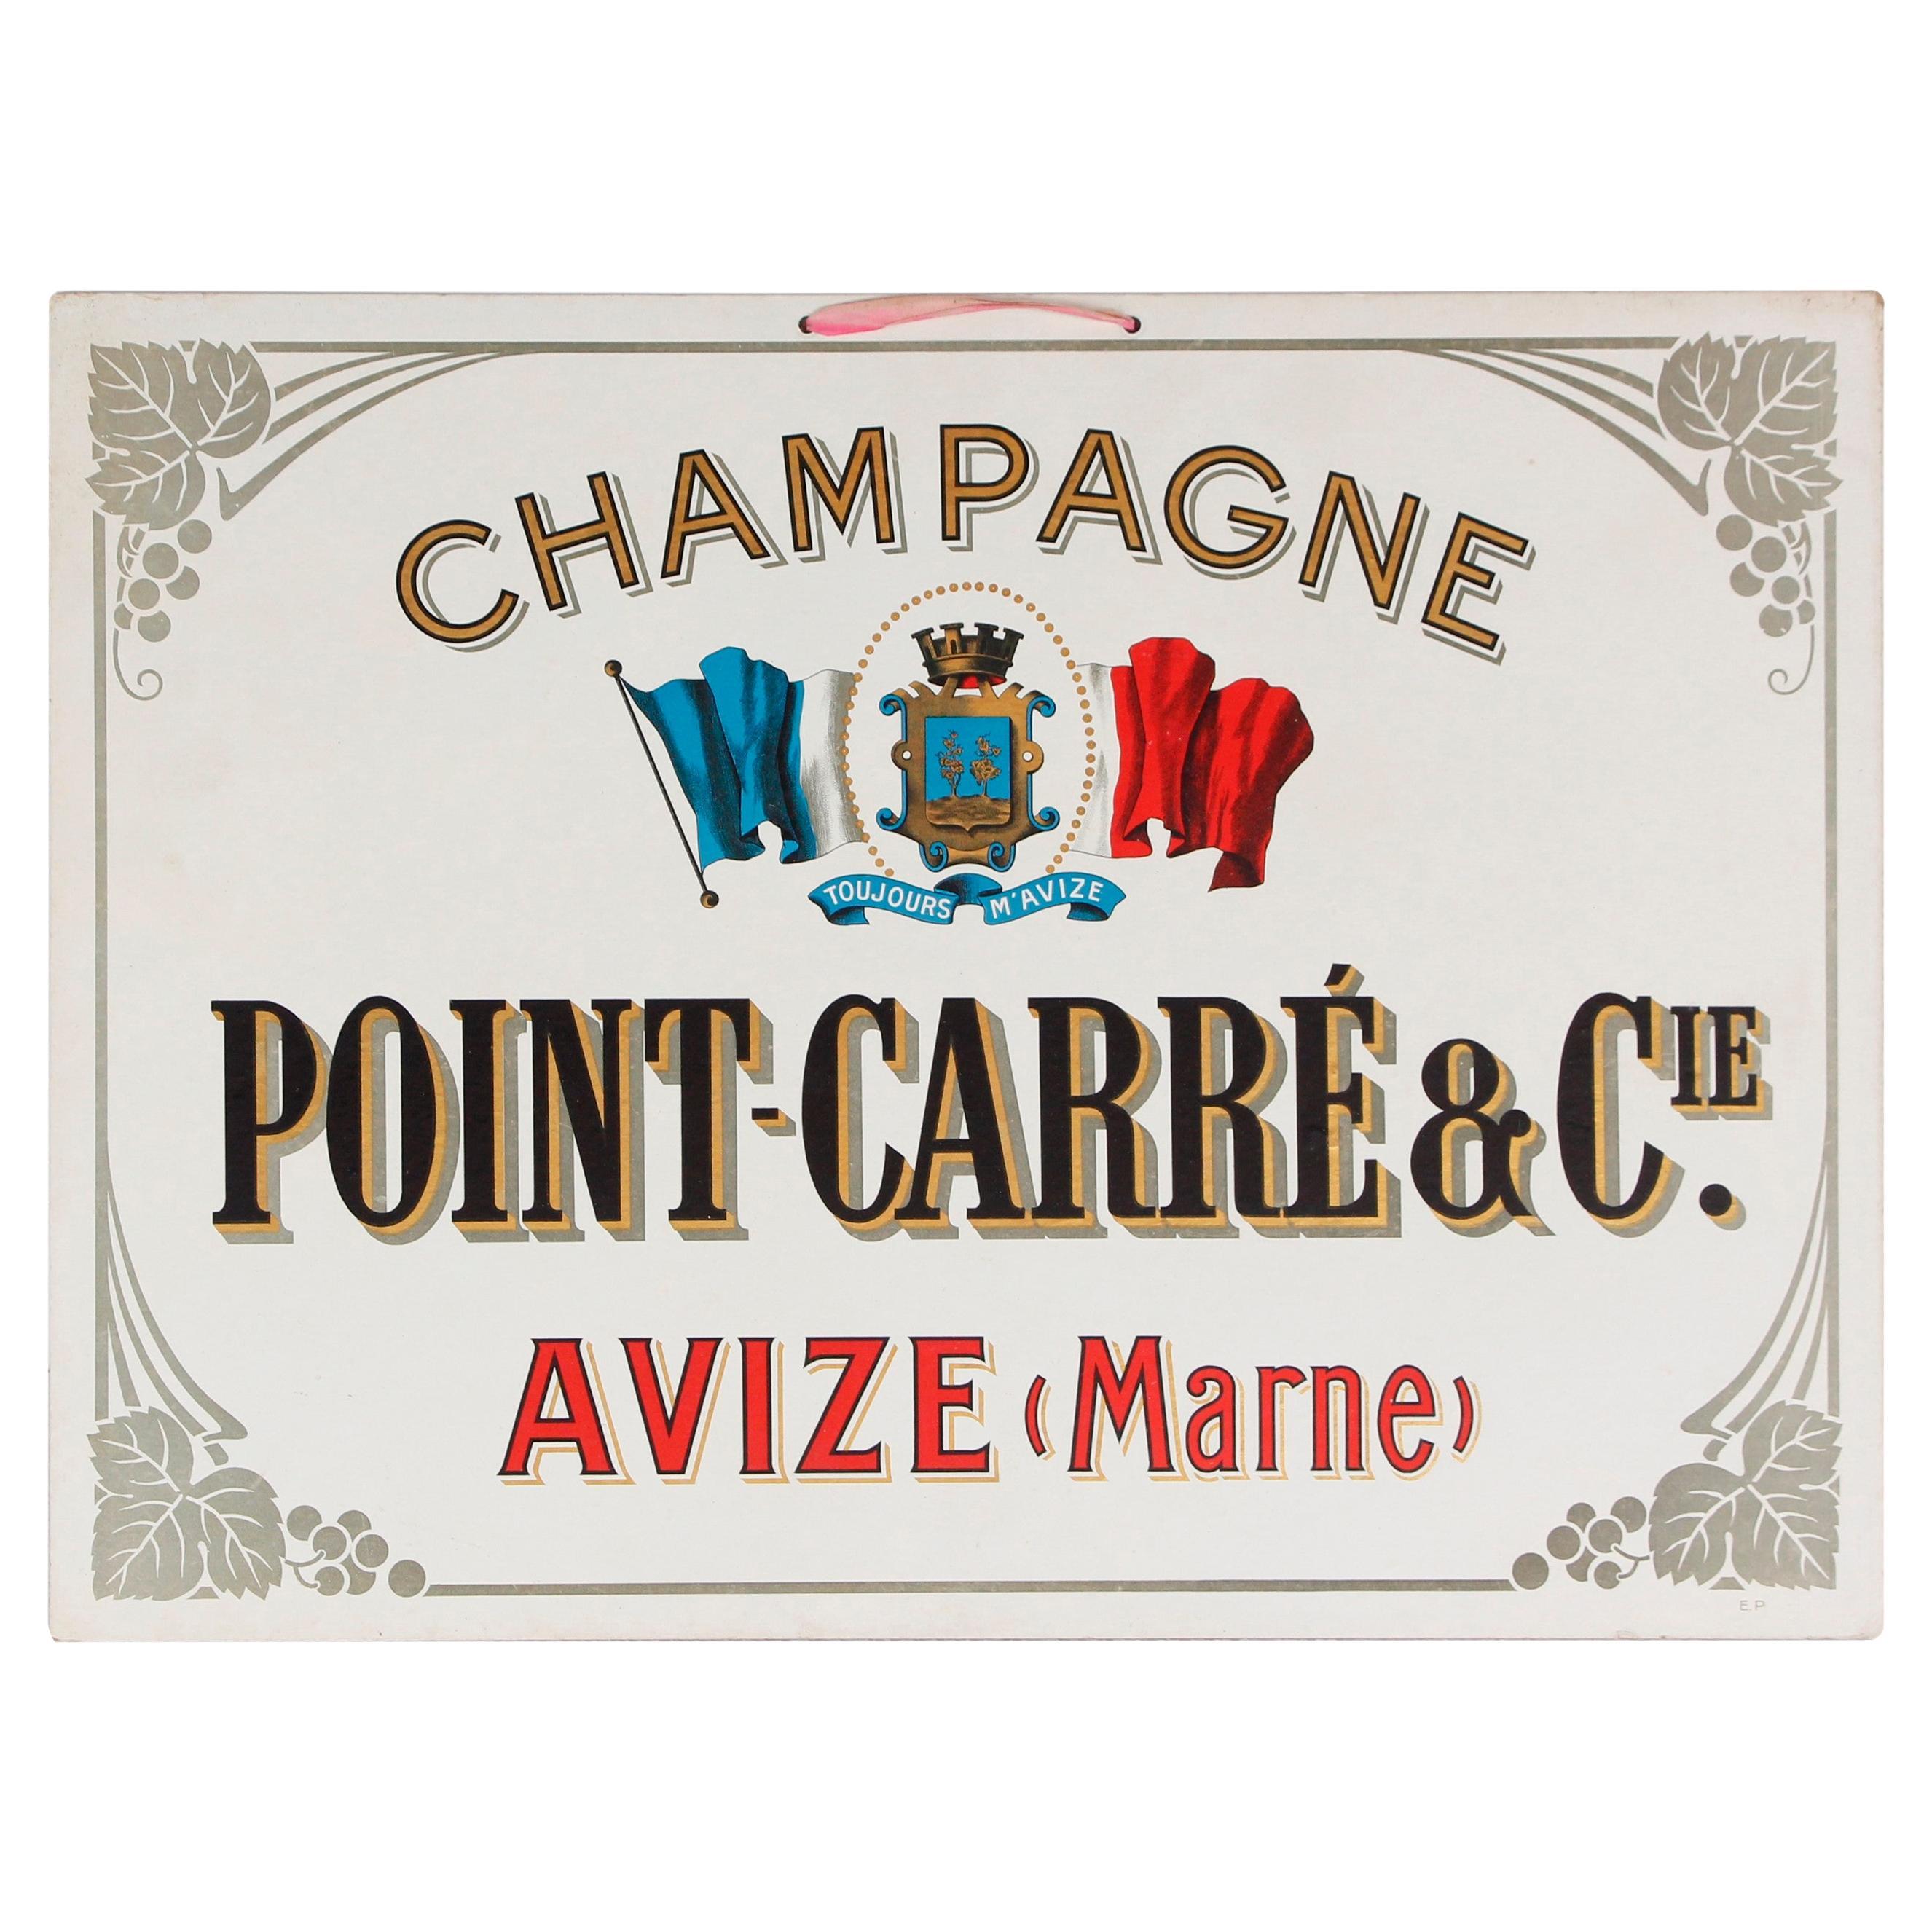 Europäischer Champagnerpunkt Carre & C.-Schild